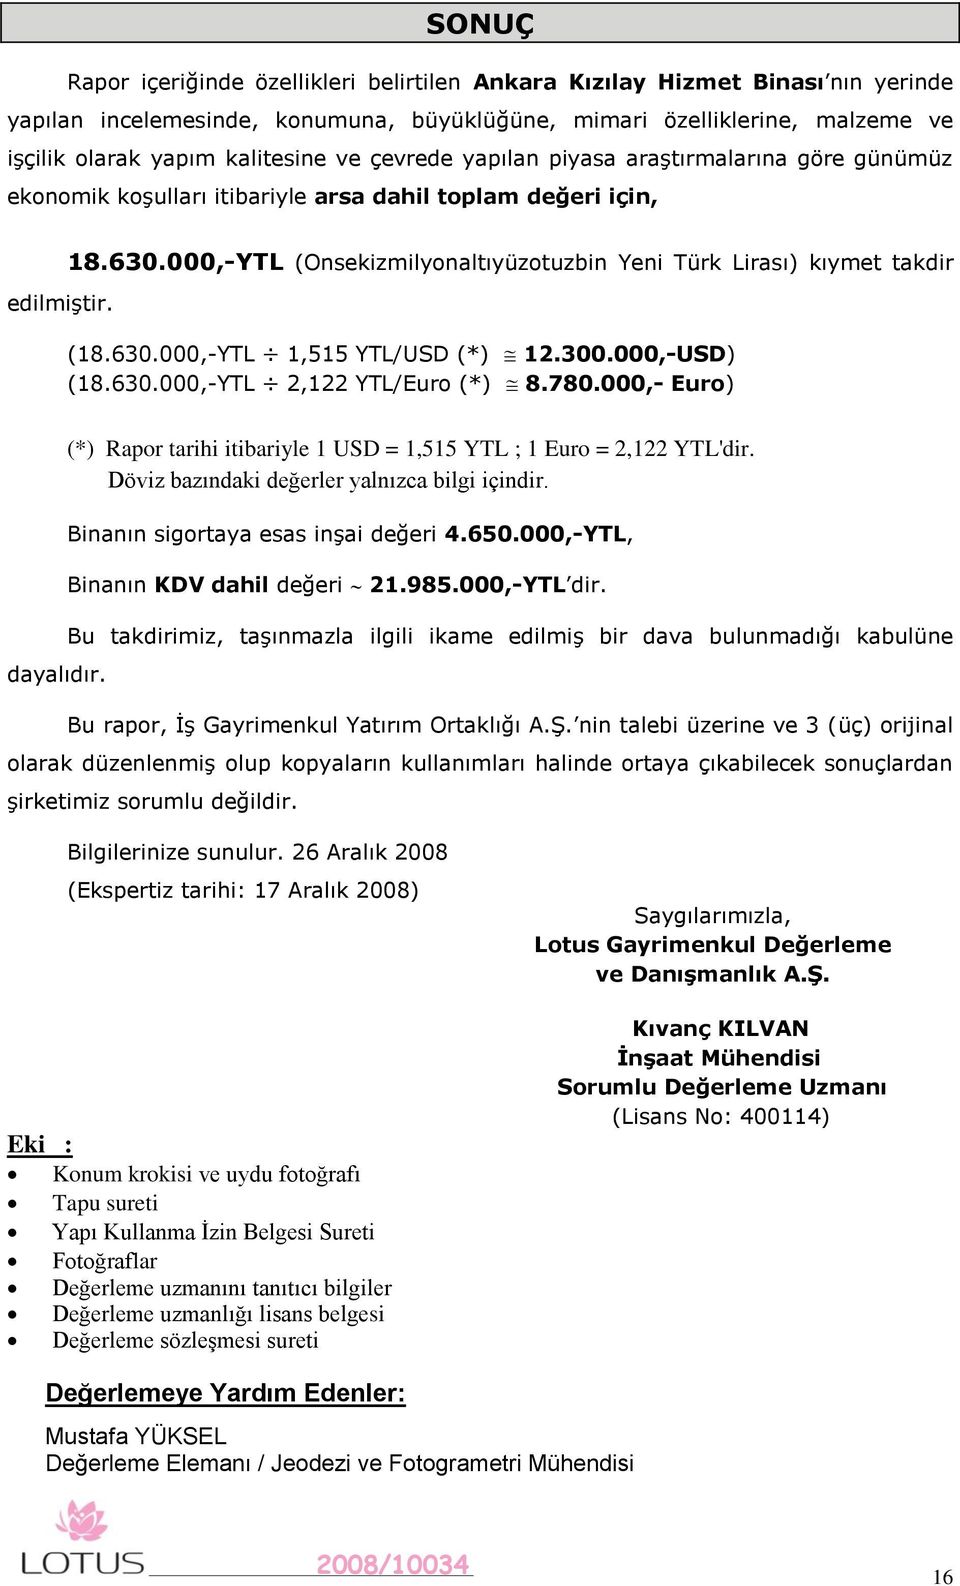 000,-YTL (Onsekizmilyonaltıyüzotuzbin Yeni Türk Lirası) kıymet takdir (18.630.000,-YTL 1,515 YTL/USD (*) 12.300.000,-USD) (18.630.000,-YTL 2,122 YTL/Euro (*) 8.780.000,- Euro) dayalıdır.